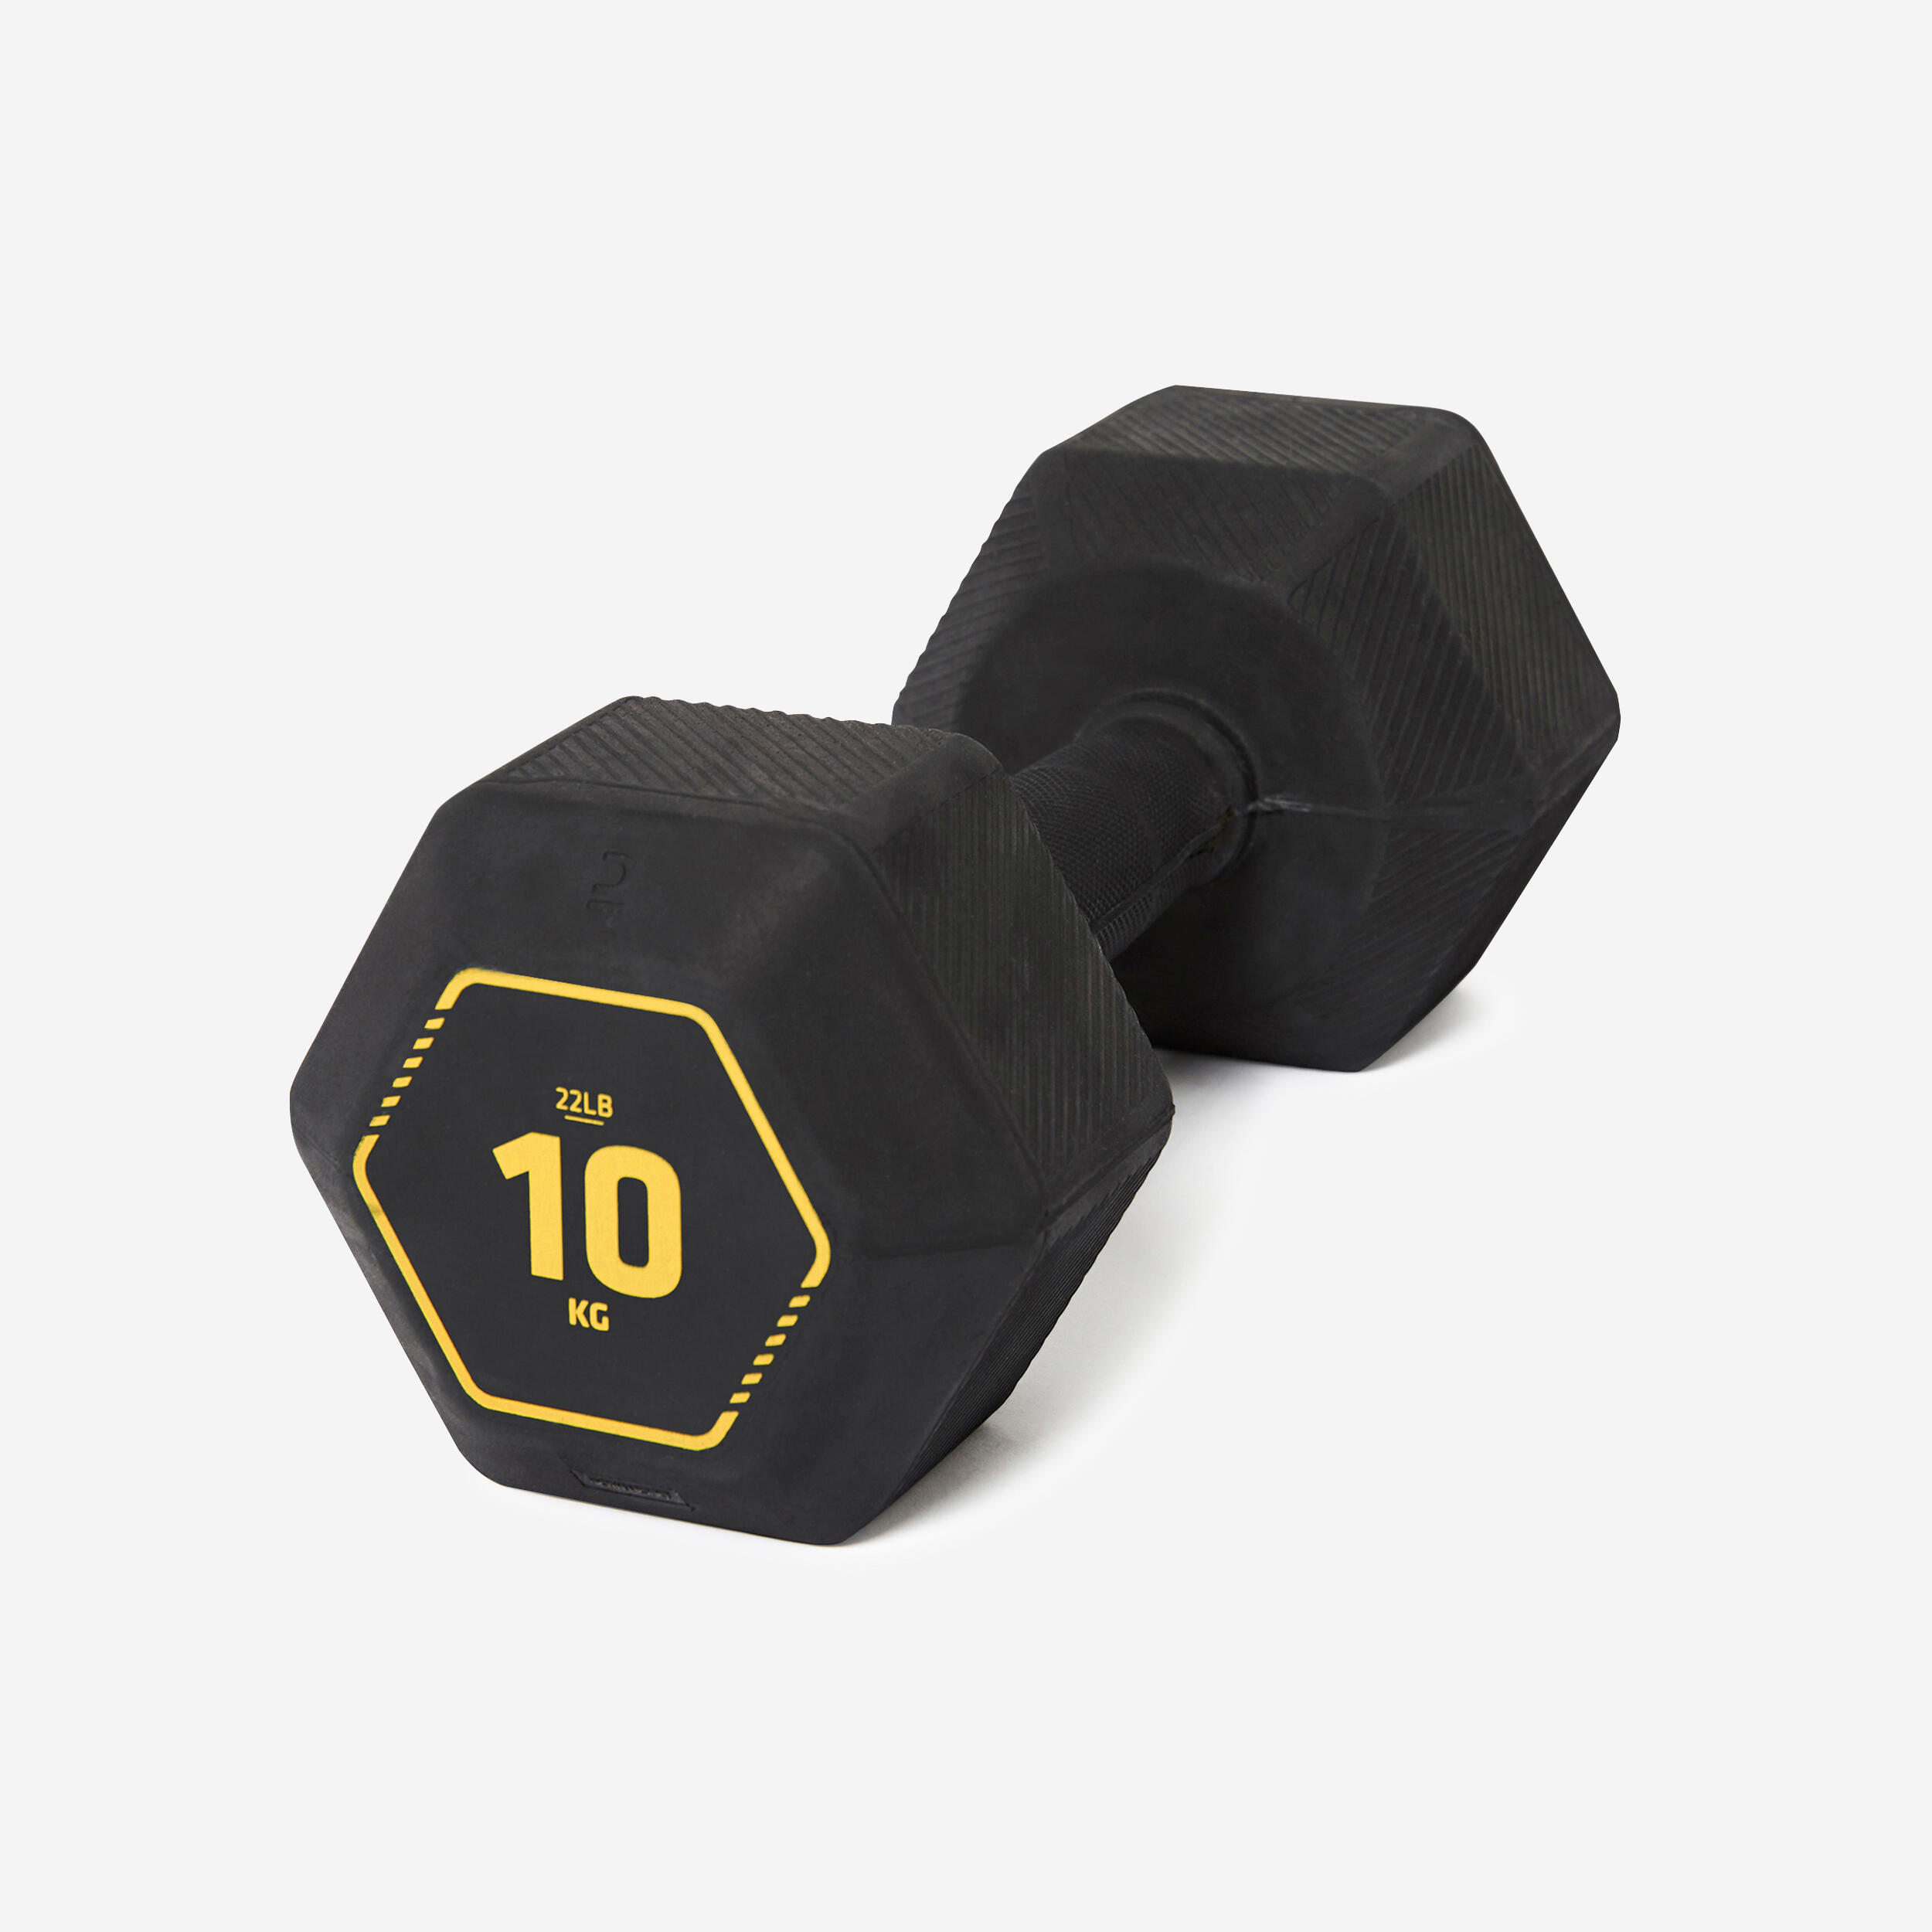 CORENGTH 10 kg Cross Training & Weight Training Hexagonal Dumbbell - Black